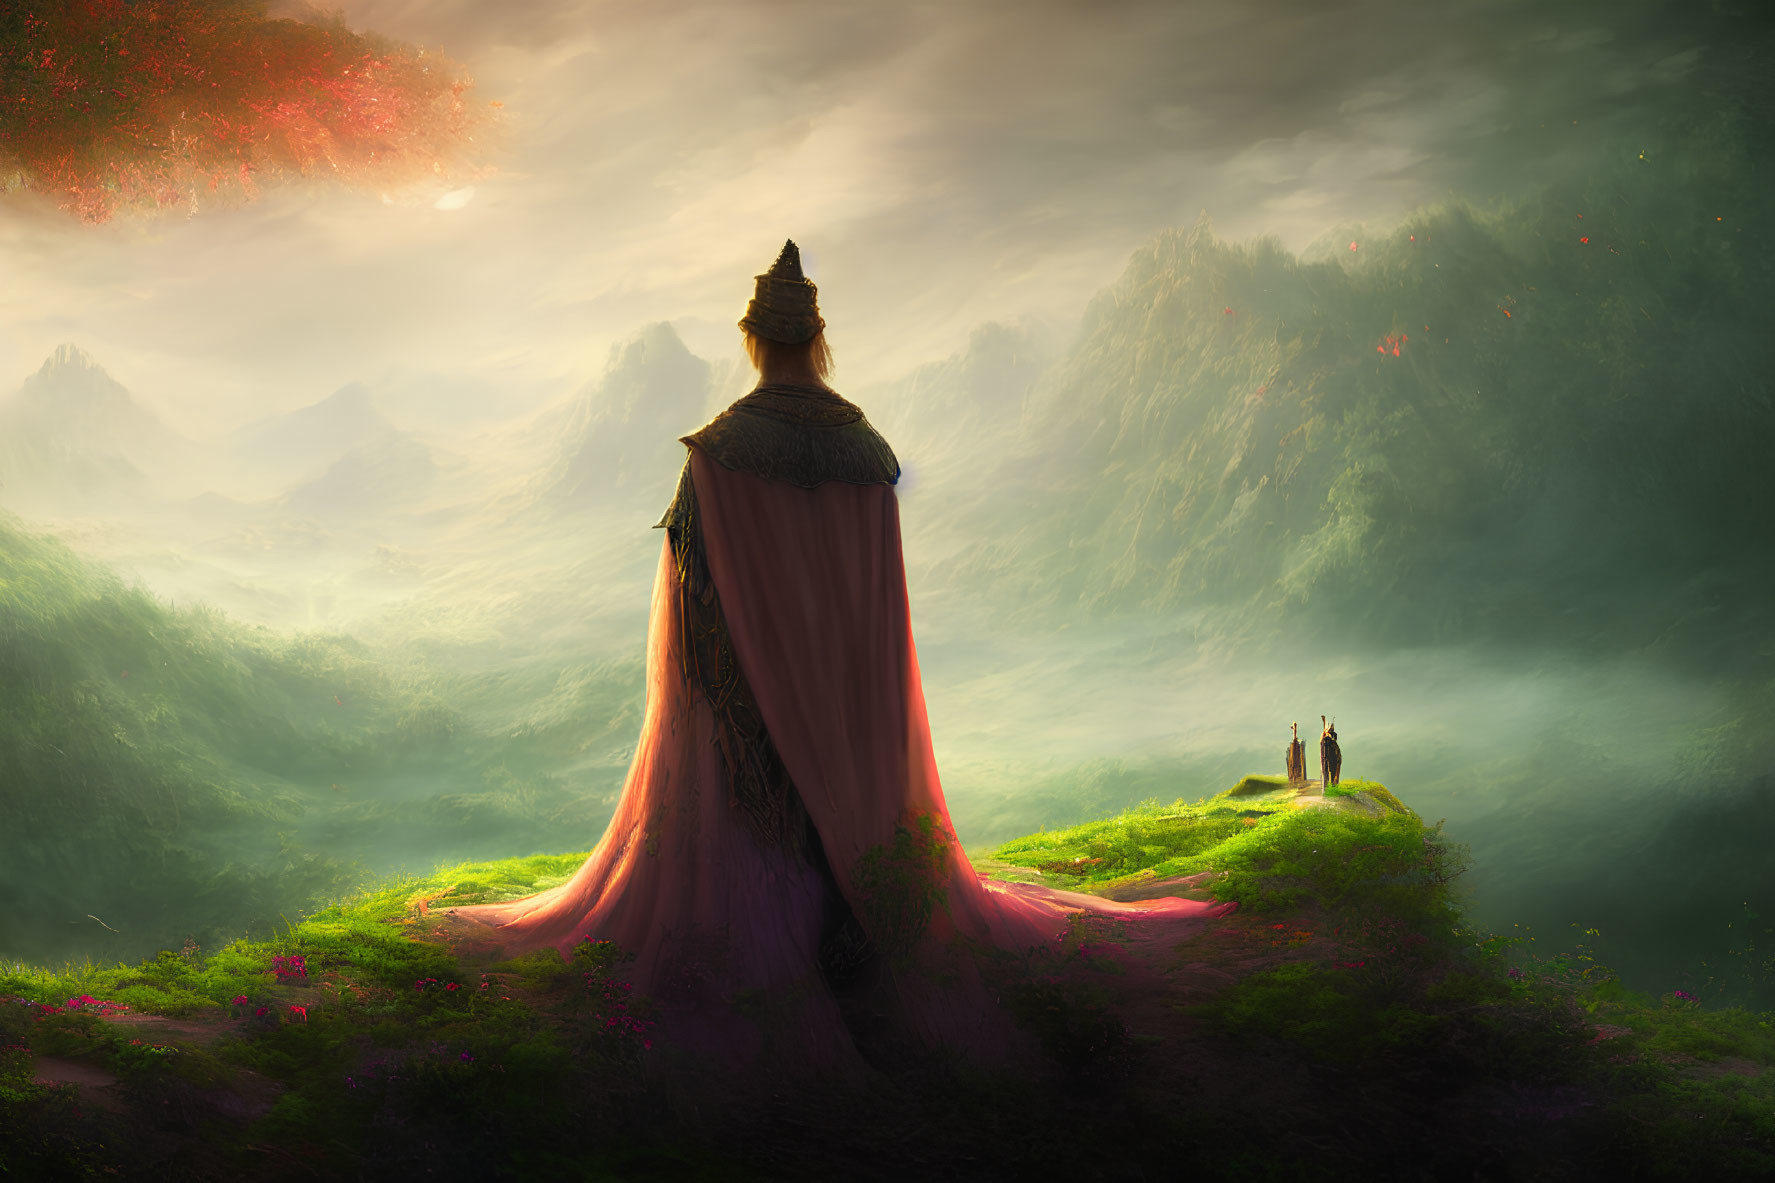 Cloaked figure on hilltop gazes at misty mountain landscape